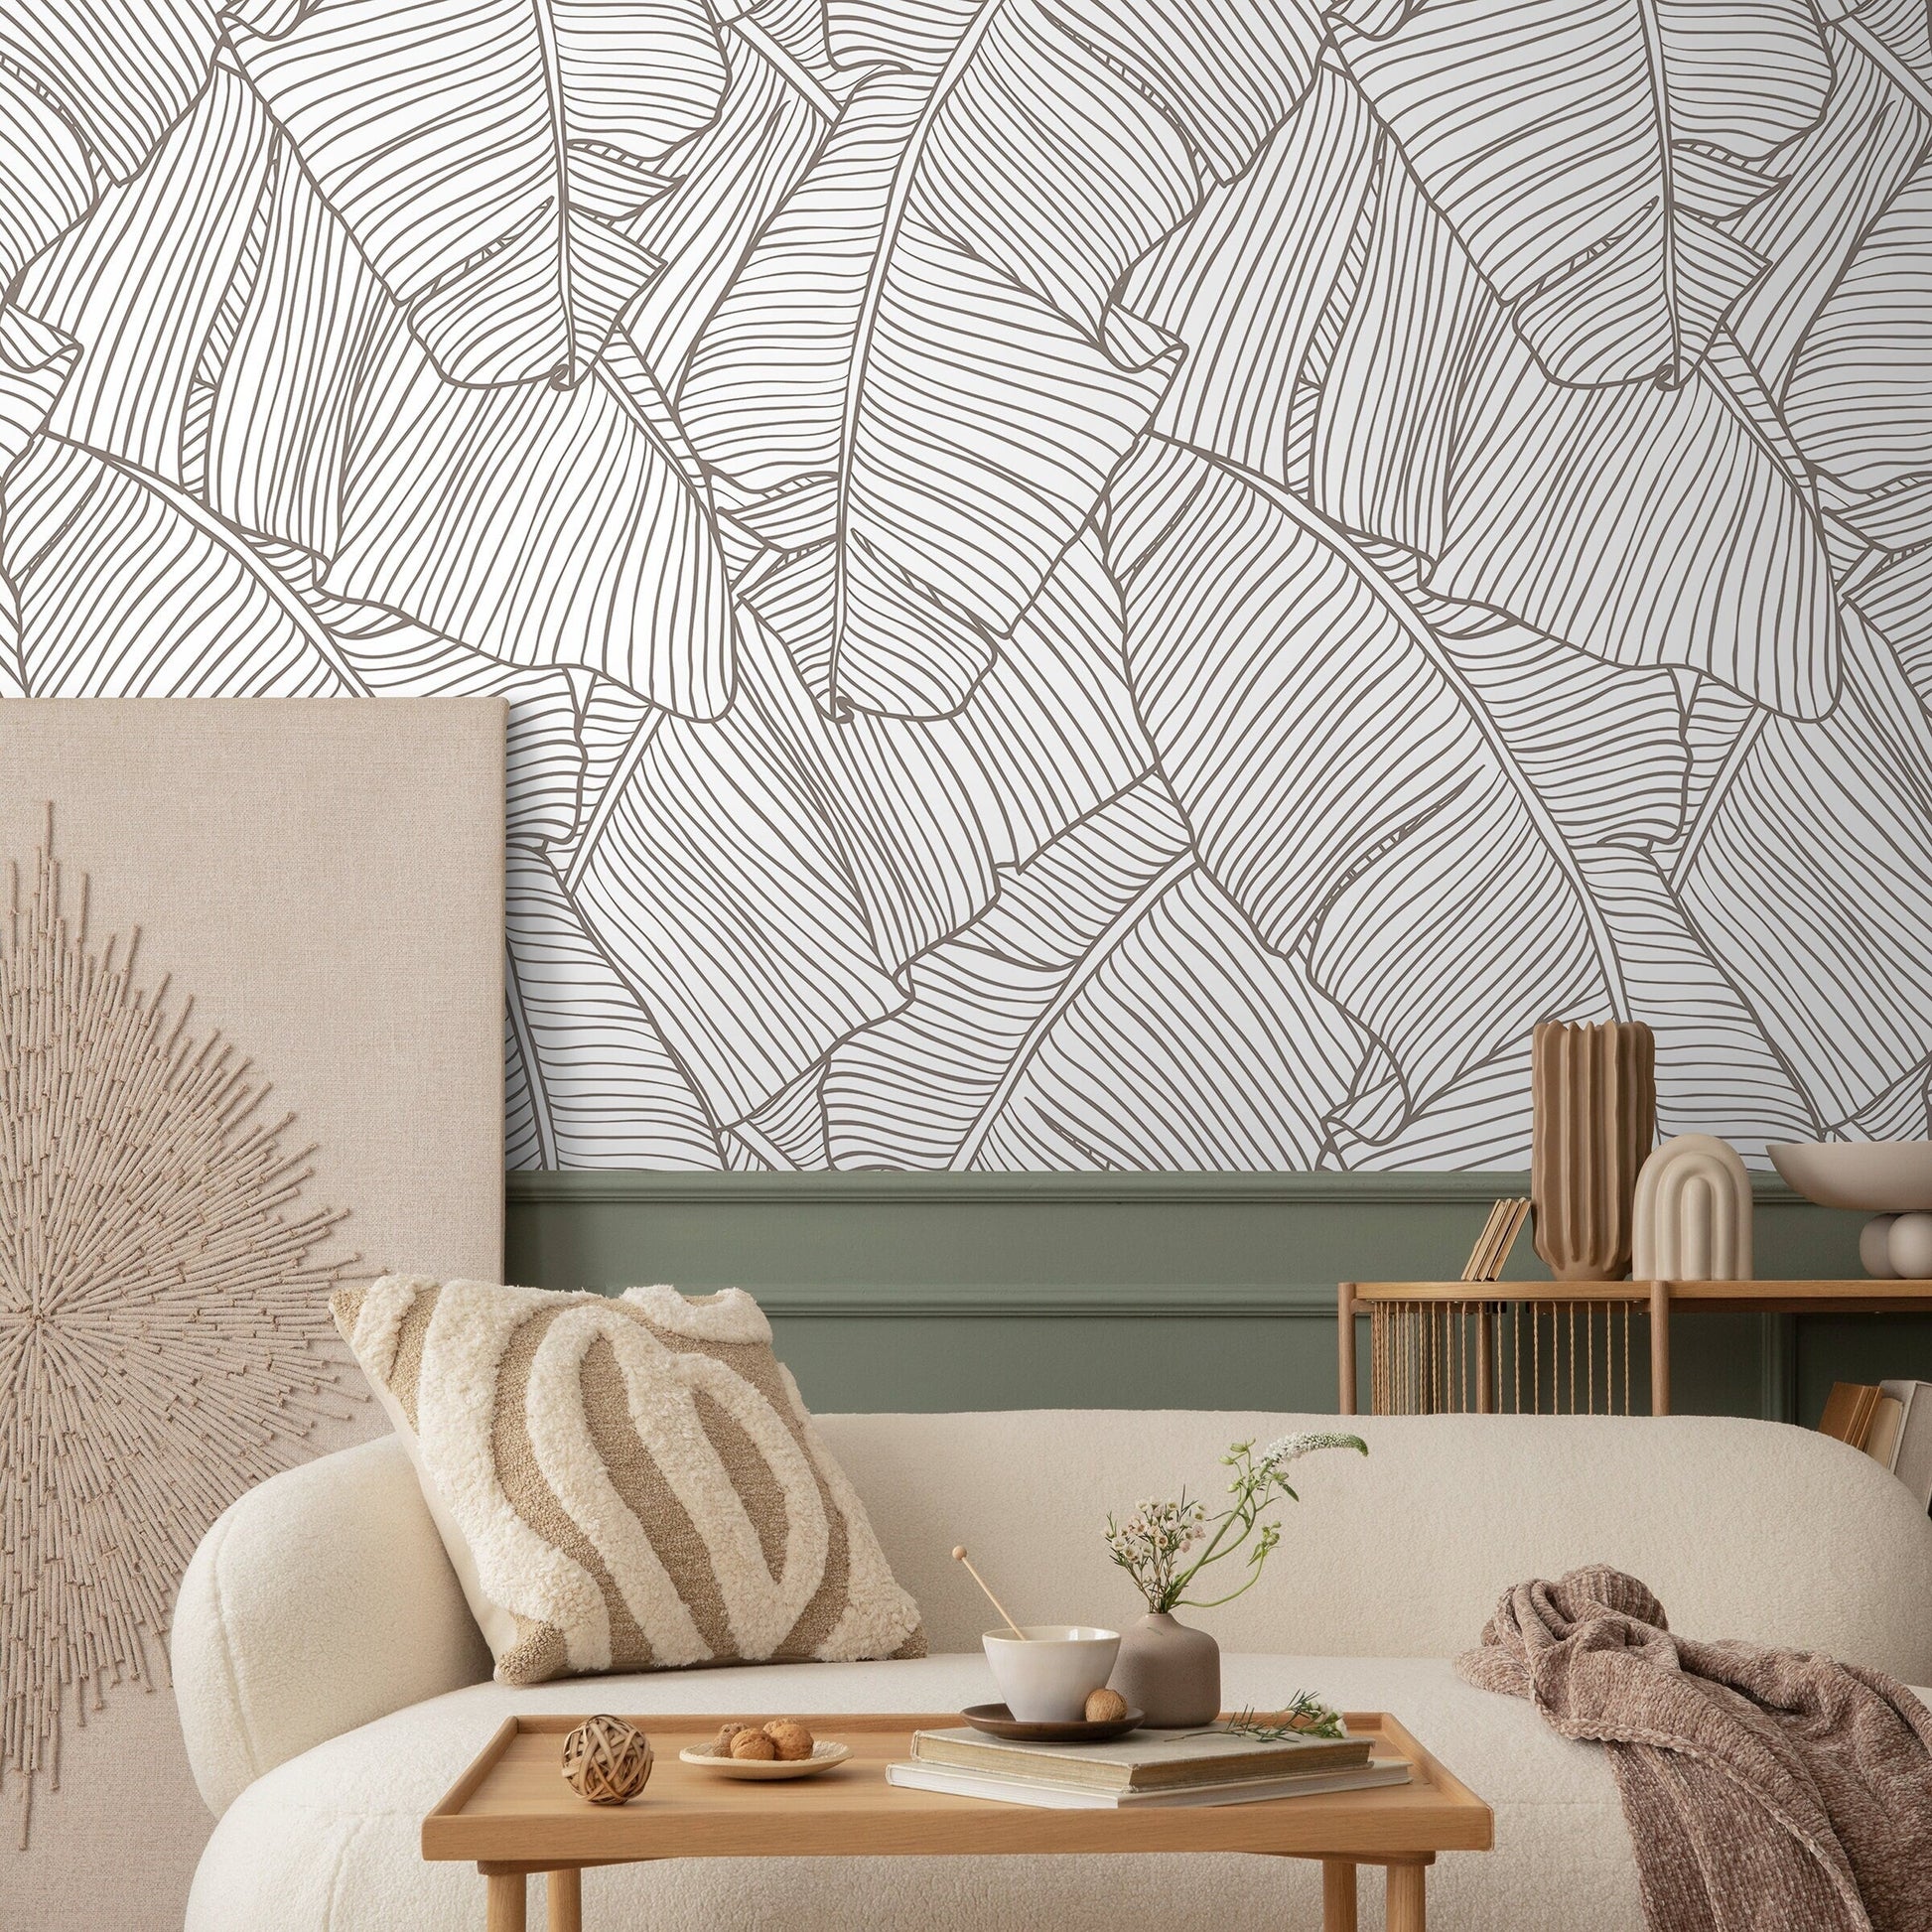 Removable Wallpaper Peel and Stick Wallpaper Wall Paper Wall Mural - Banana Leaf Wallpaper Tropical Wallpaper - A474